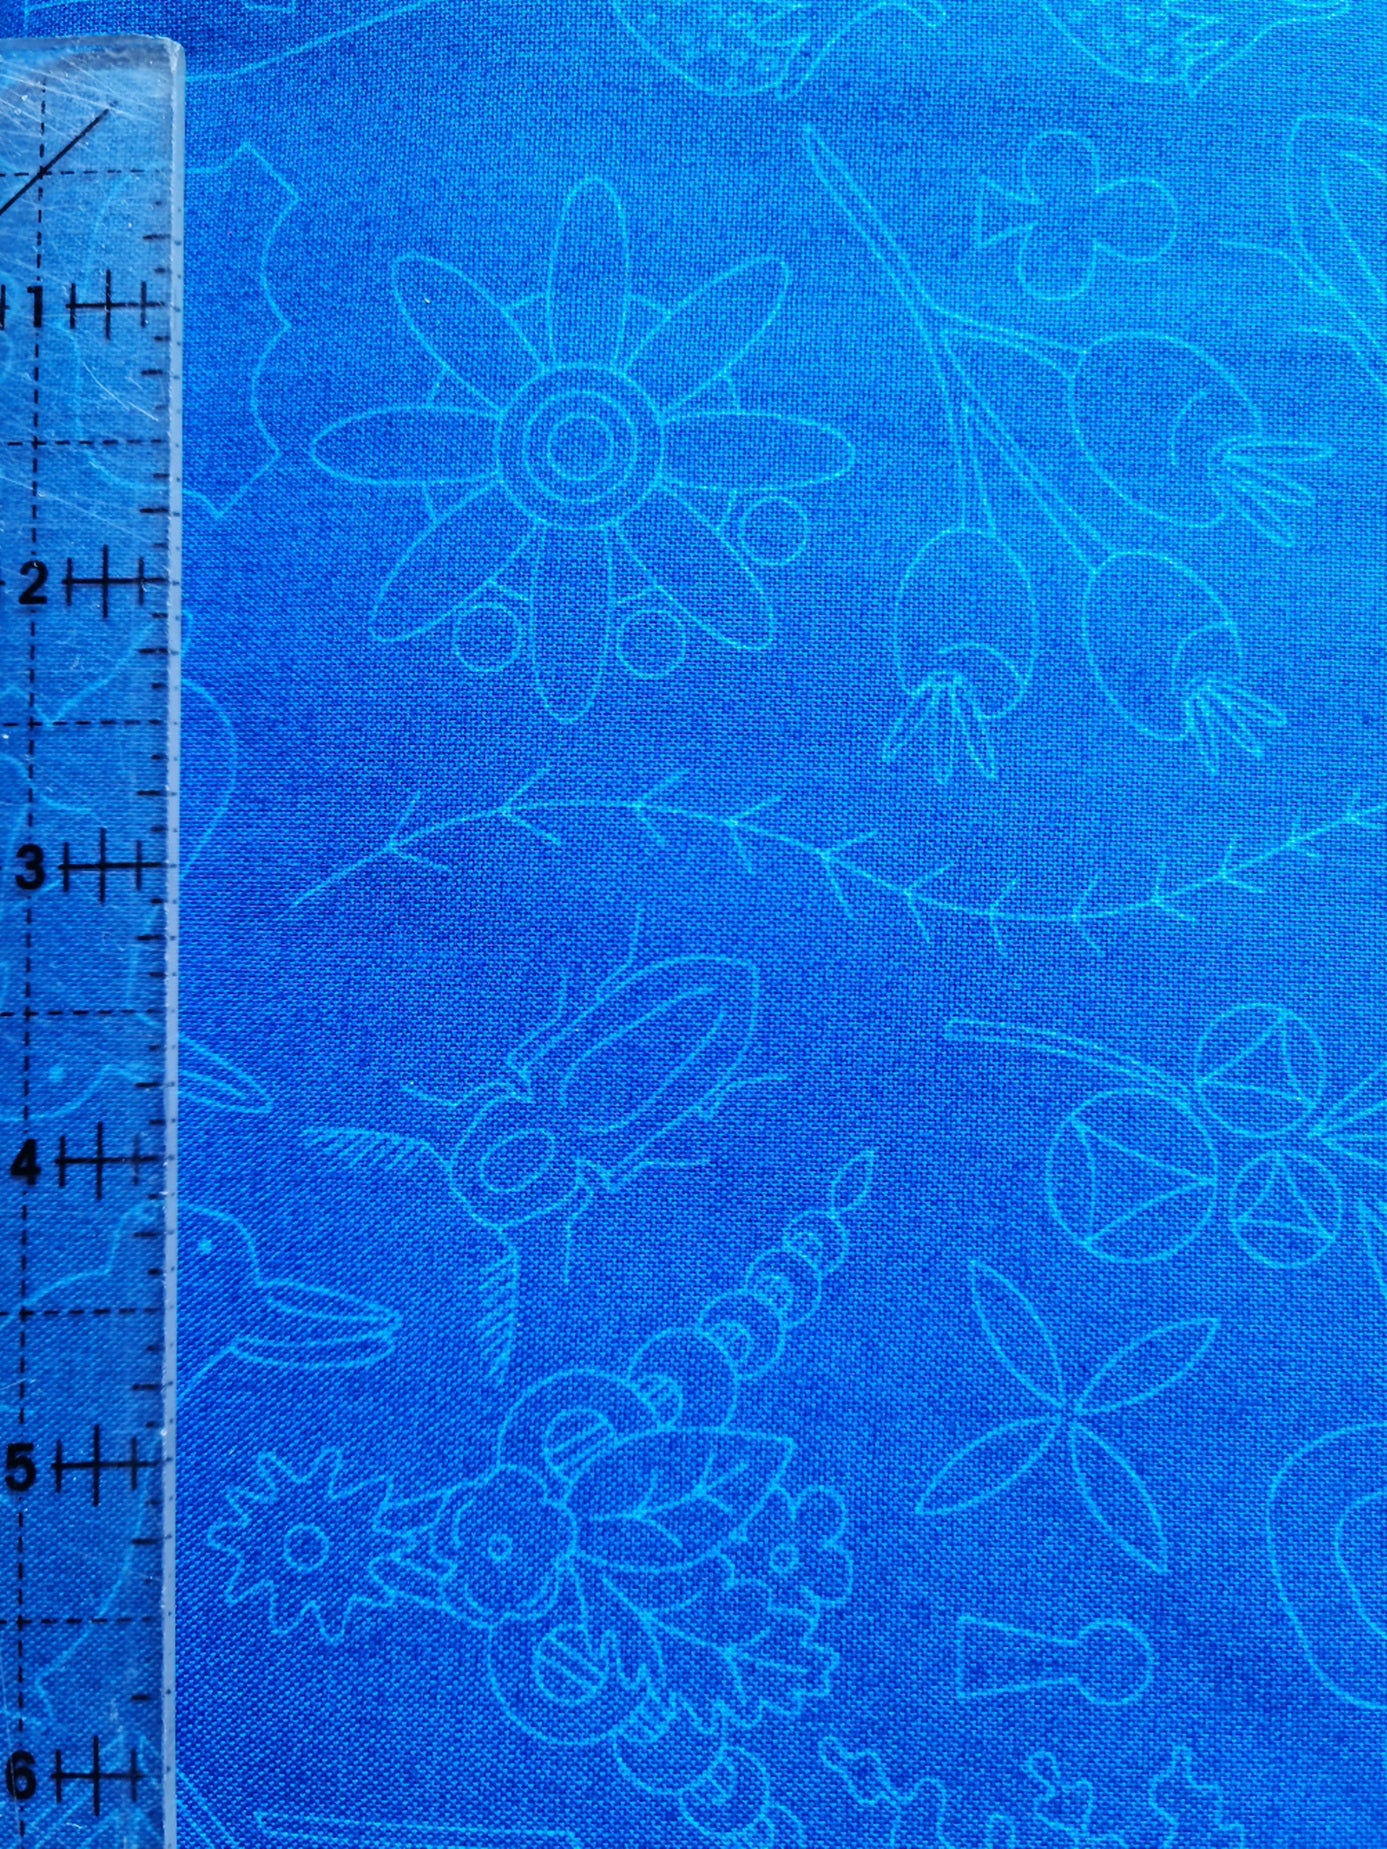 Blue sunprint cotton fabric